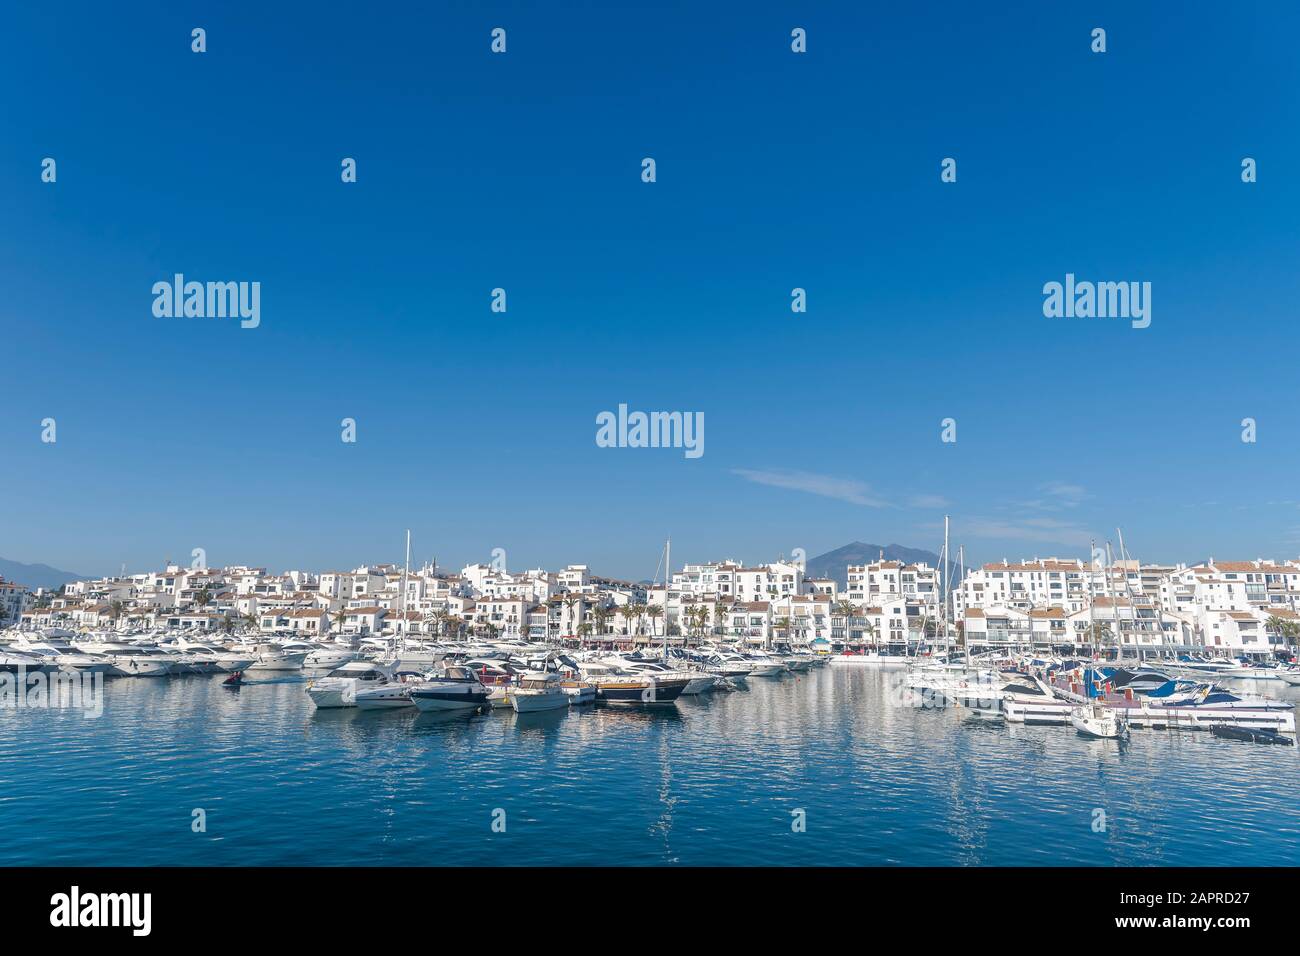 Puerto banus marbella shopping hi-res stock photography and images - Alamy